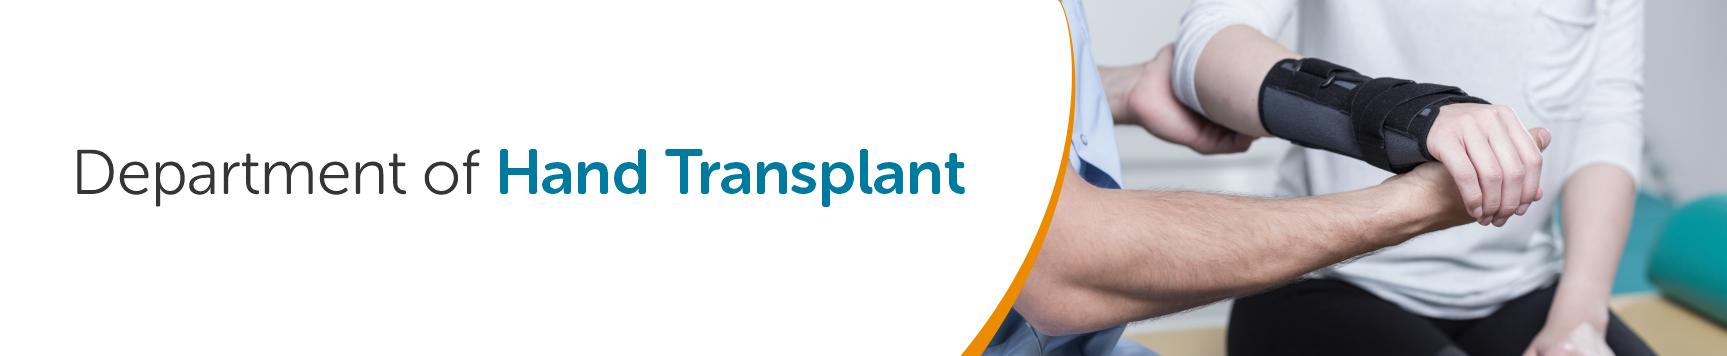 Hand Transplant - Web Banner - W 1728 x H 356 - 170224 (1)